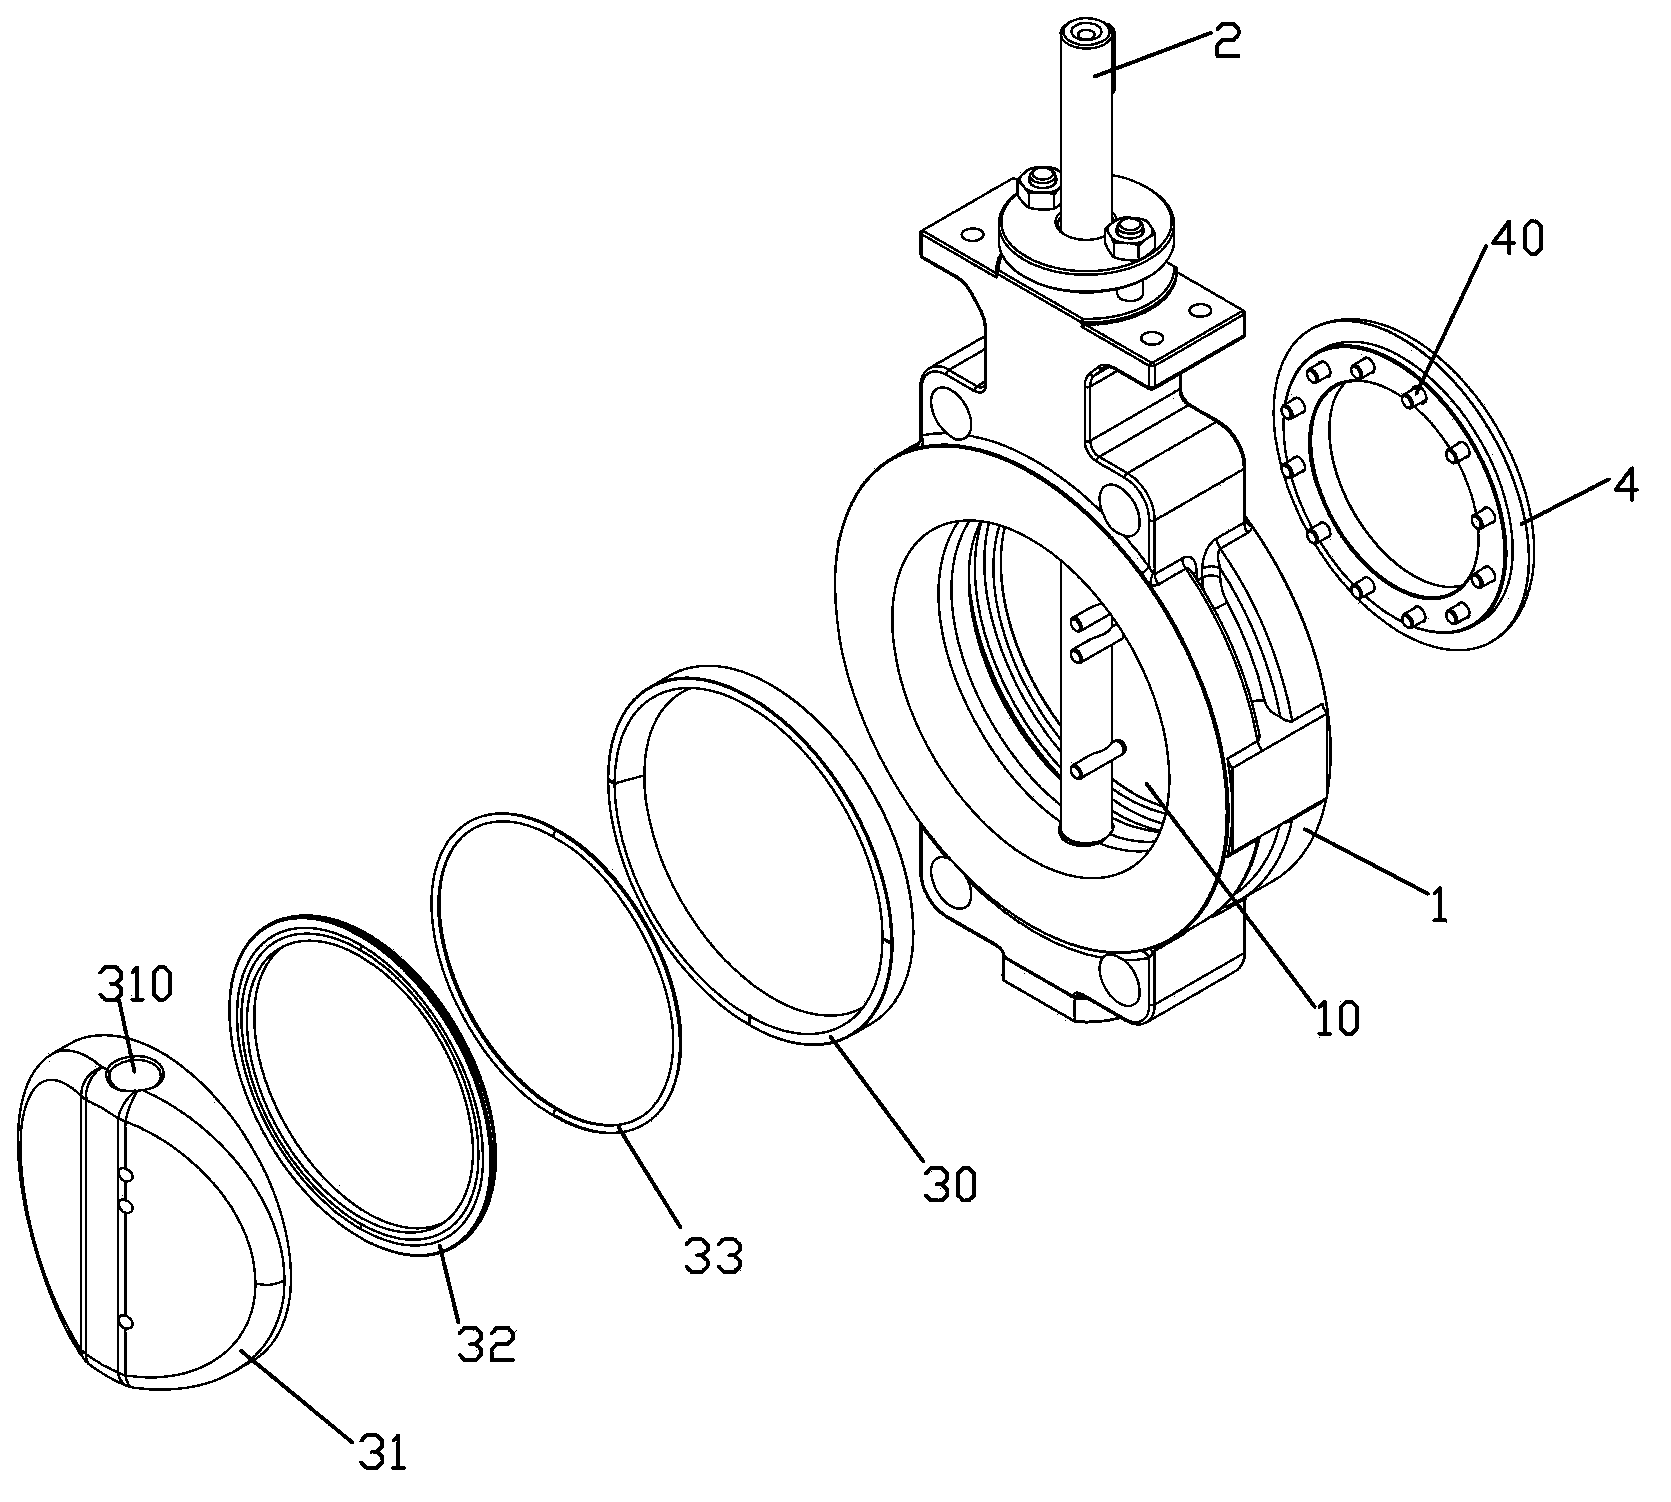 Three-eccentric valve with symmetric leakage stop ring